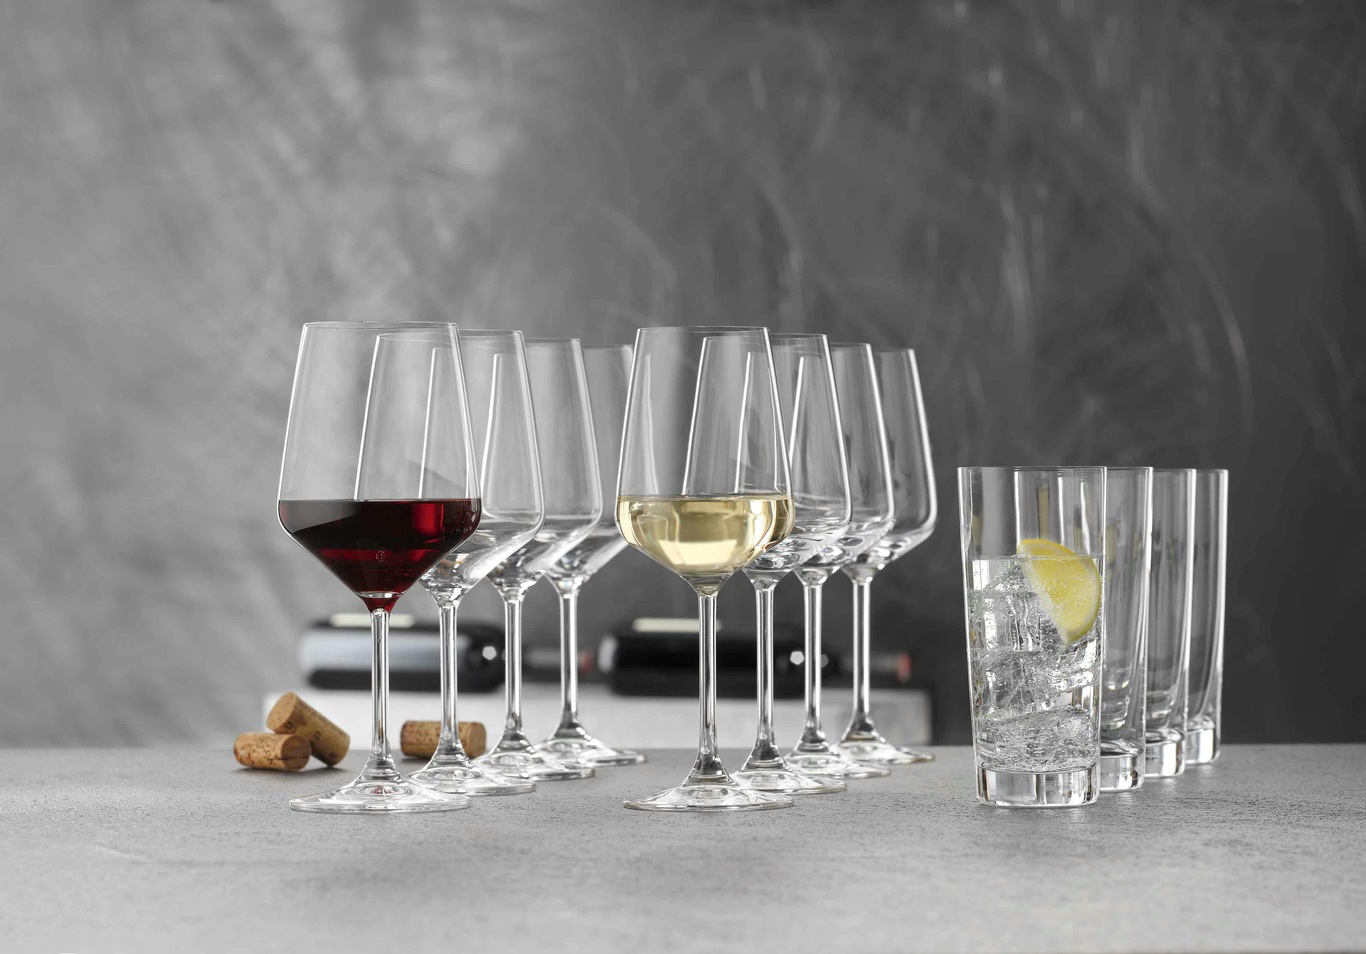 https://royaldesign.com/image/2/spiegelau-style-white-wine-glass-set-of-4-44-cl-4?w=800&quality=80